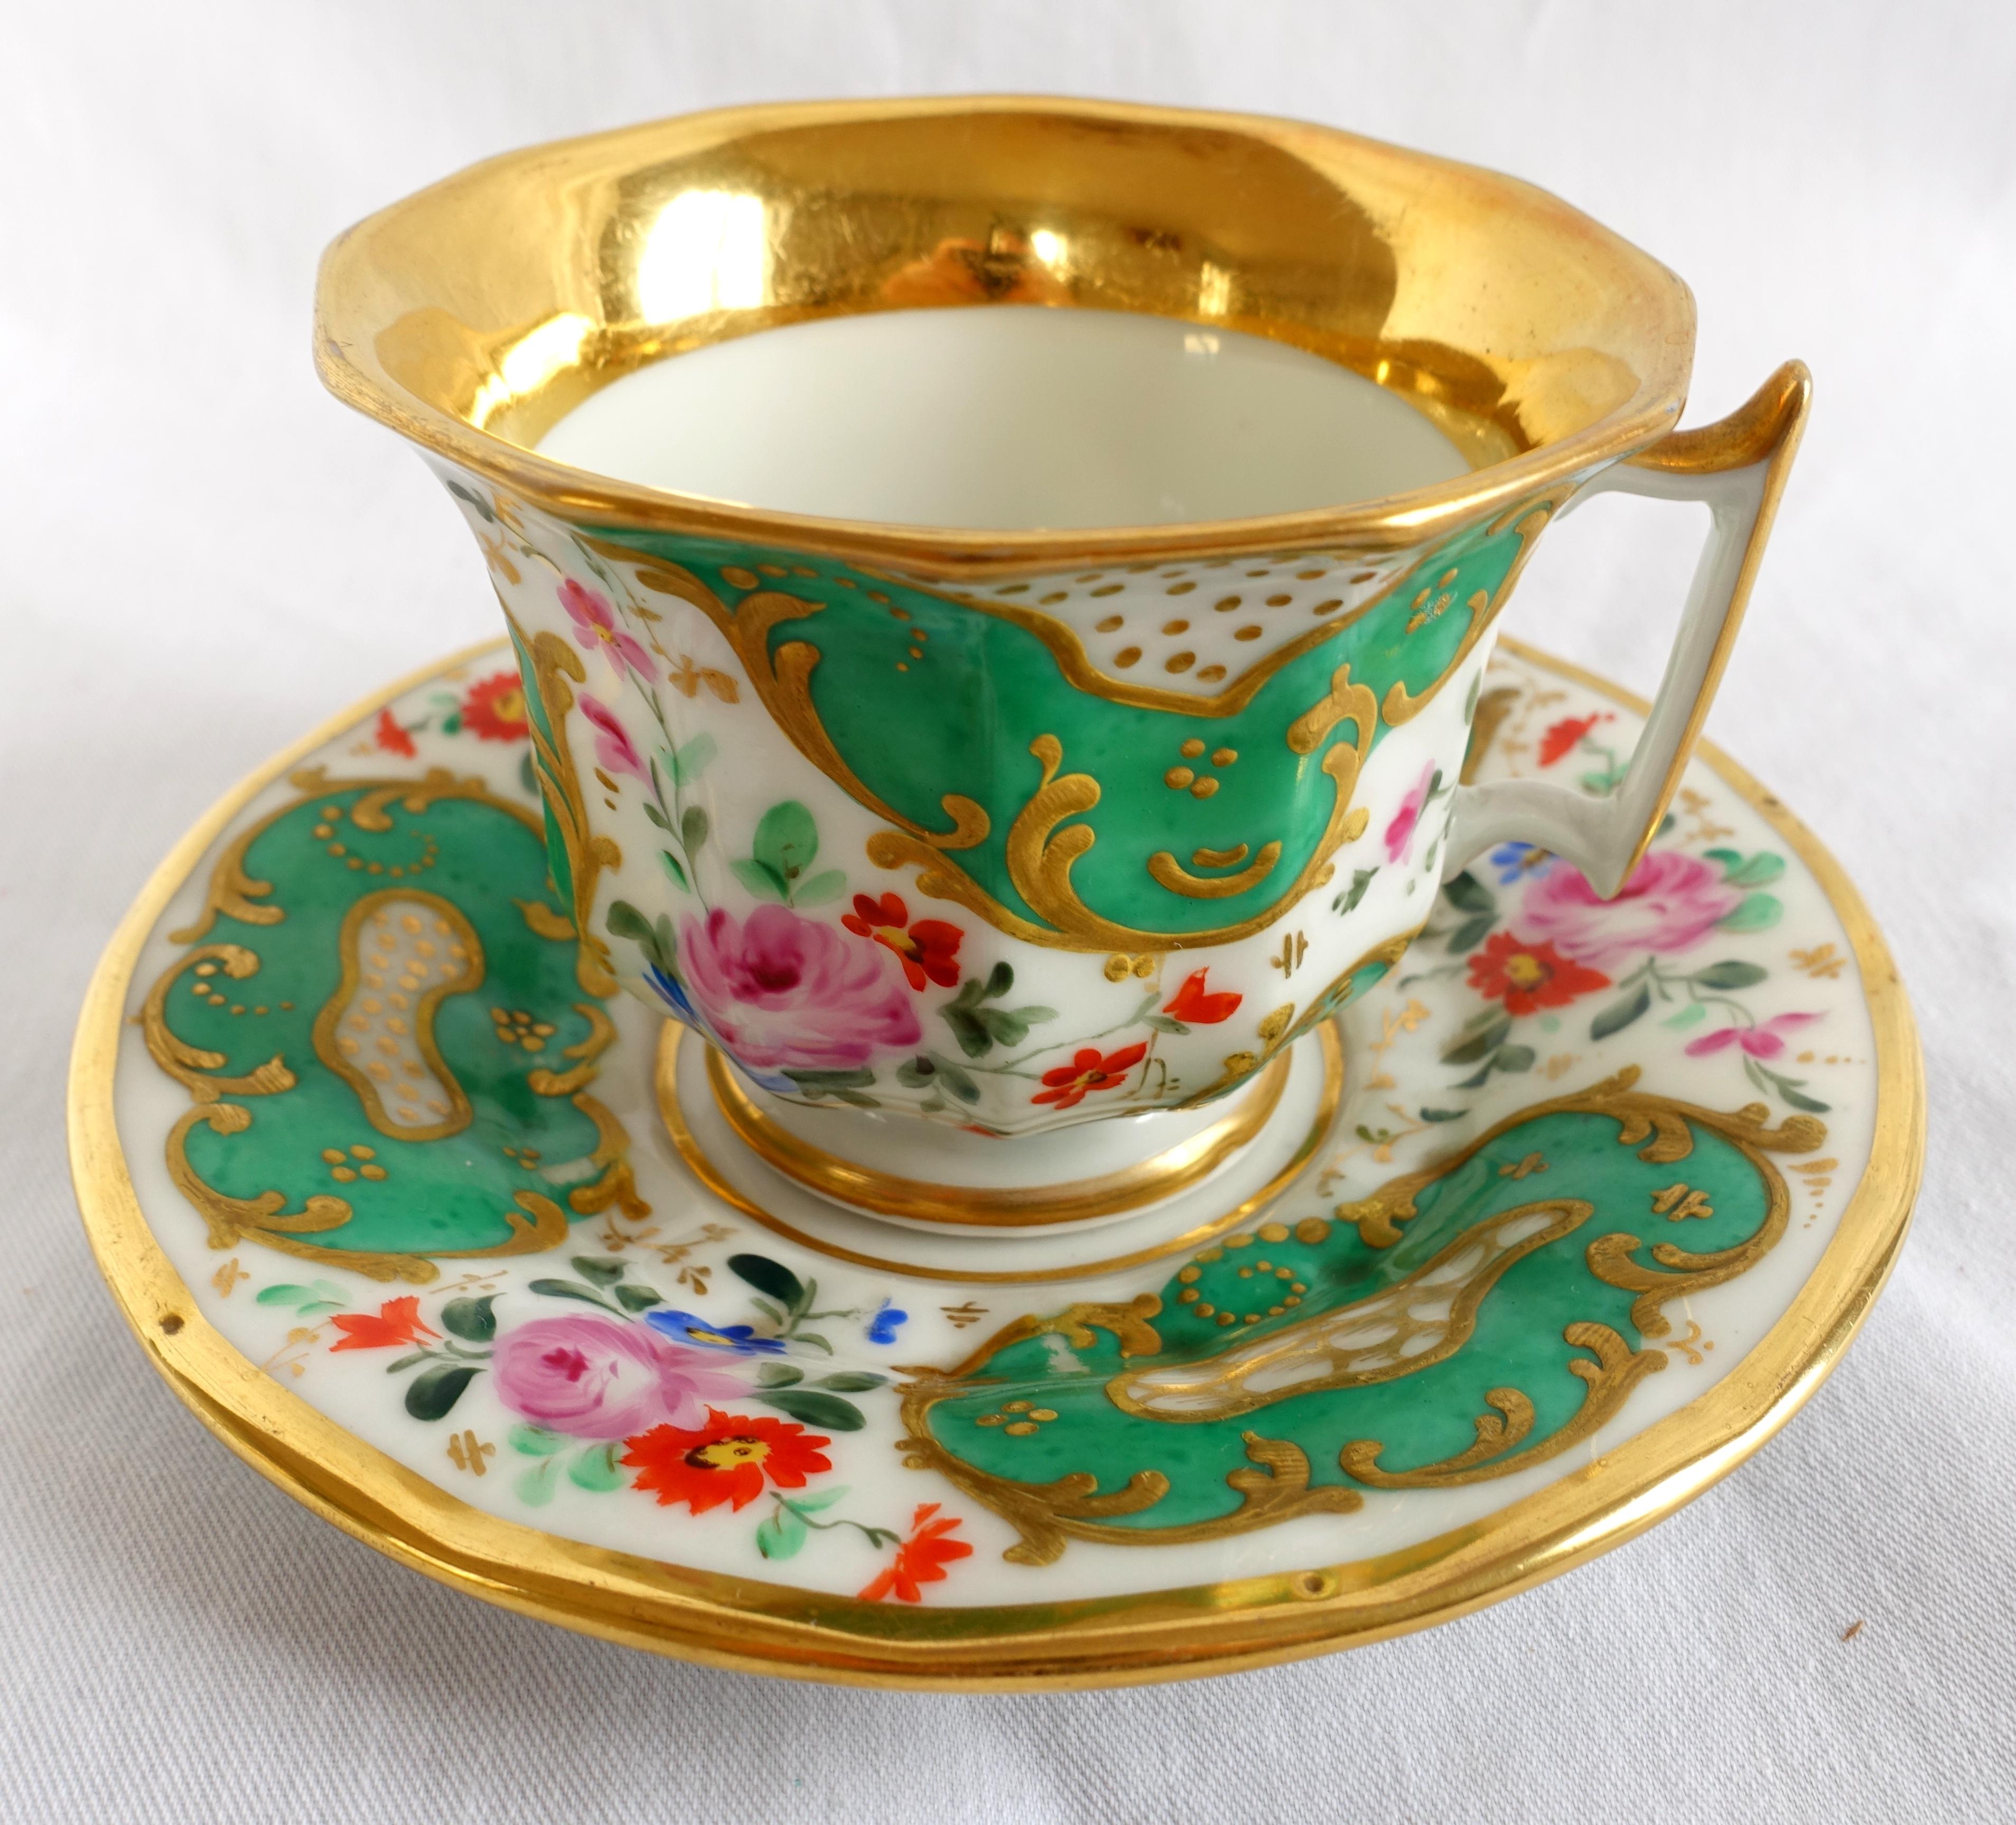 Gilt Antique French Paris porcelain coffee set for 6 - cups & saucers - 19th century